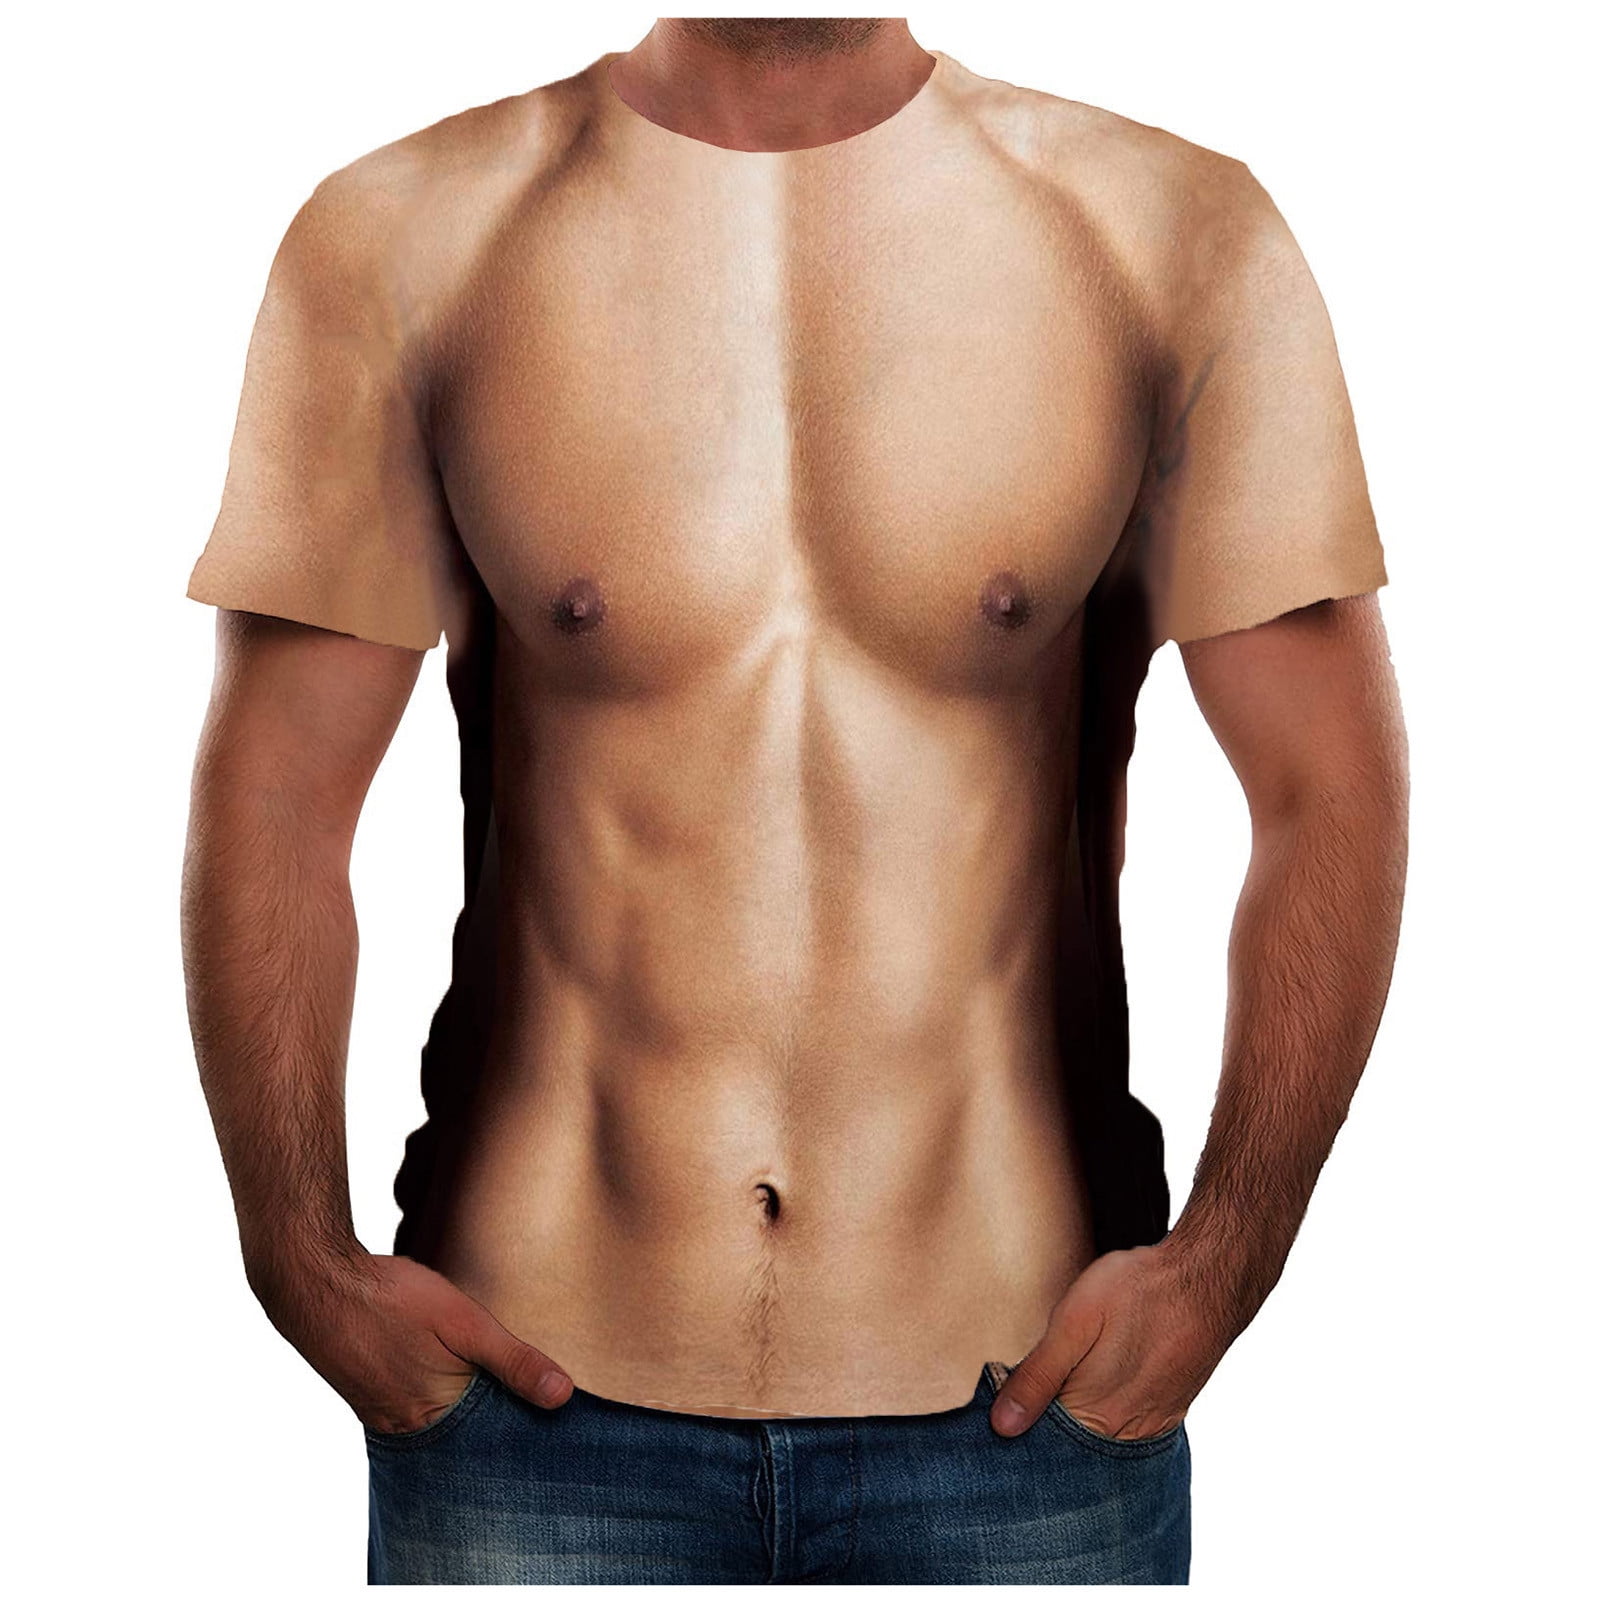 Ripped Muscles Orange, six pack, chest T-shirt' Men's Premium T-Shirt |  Spreadshirt